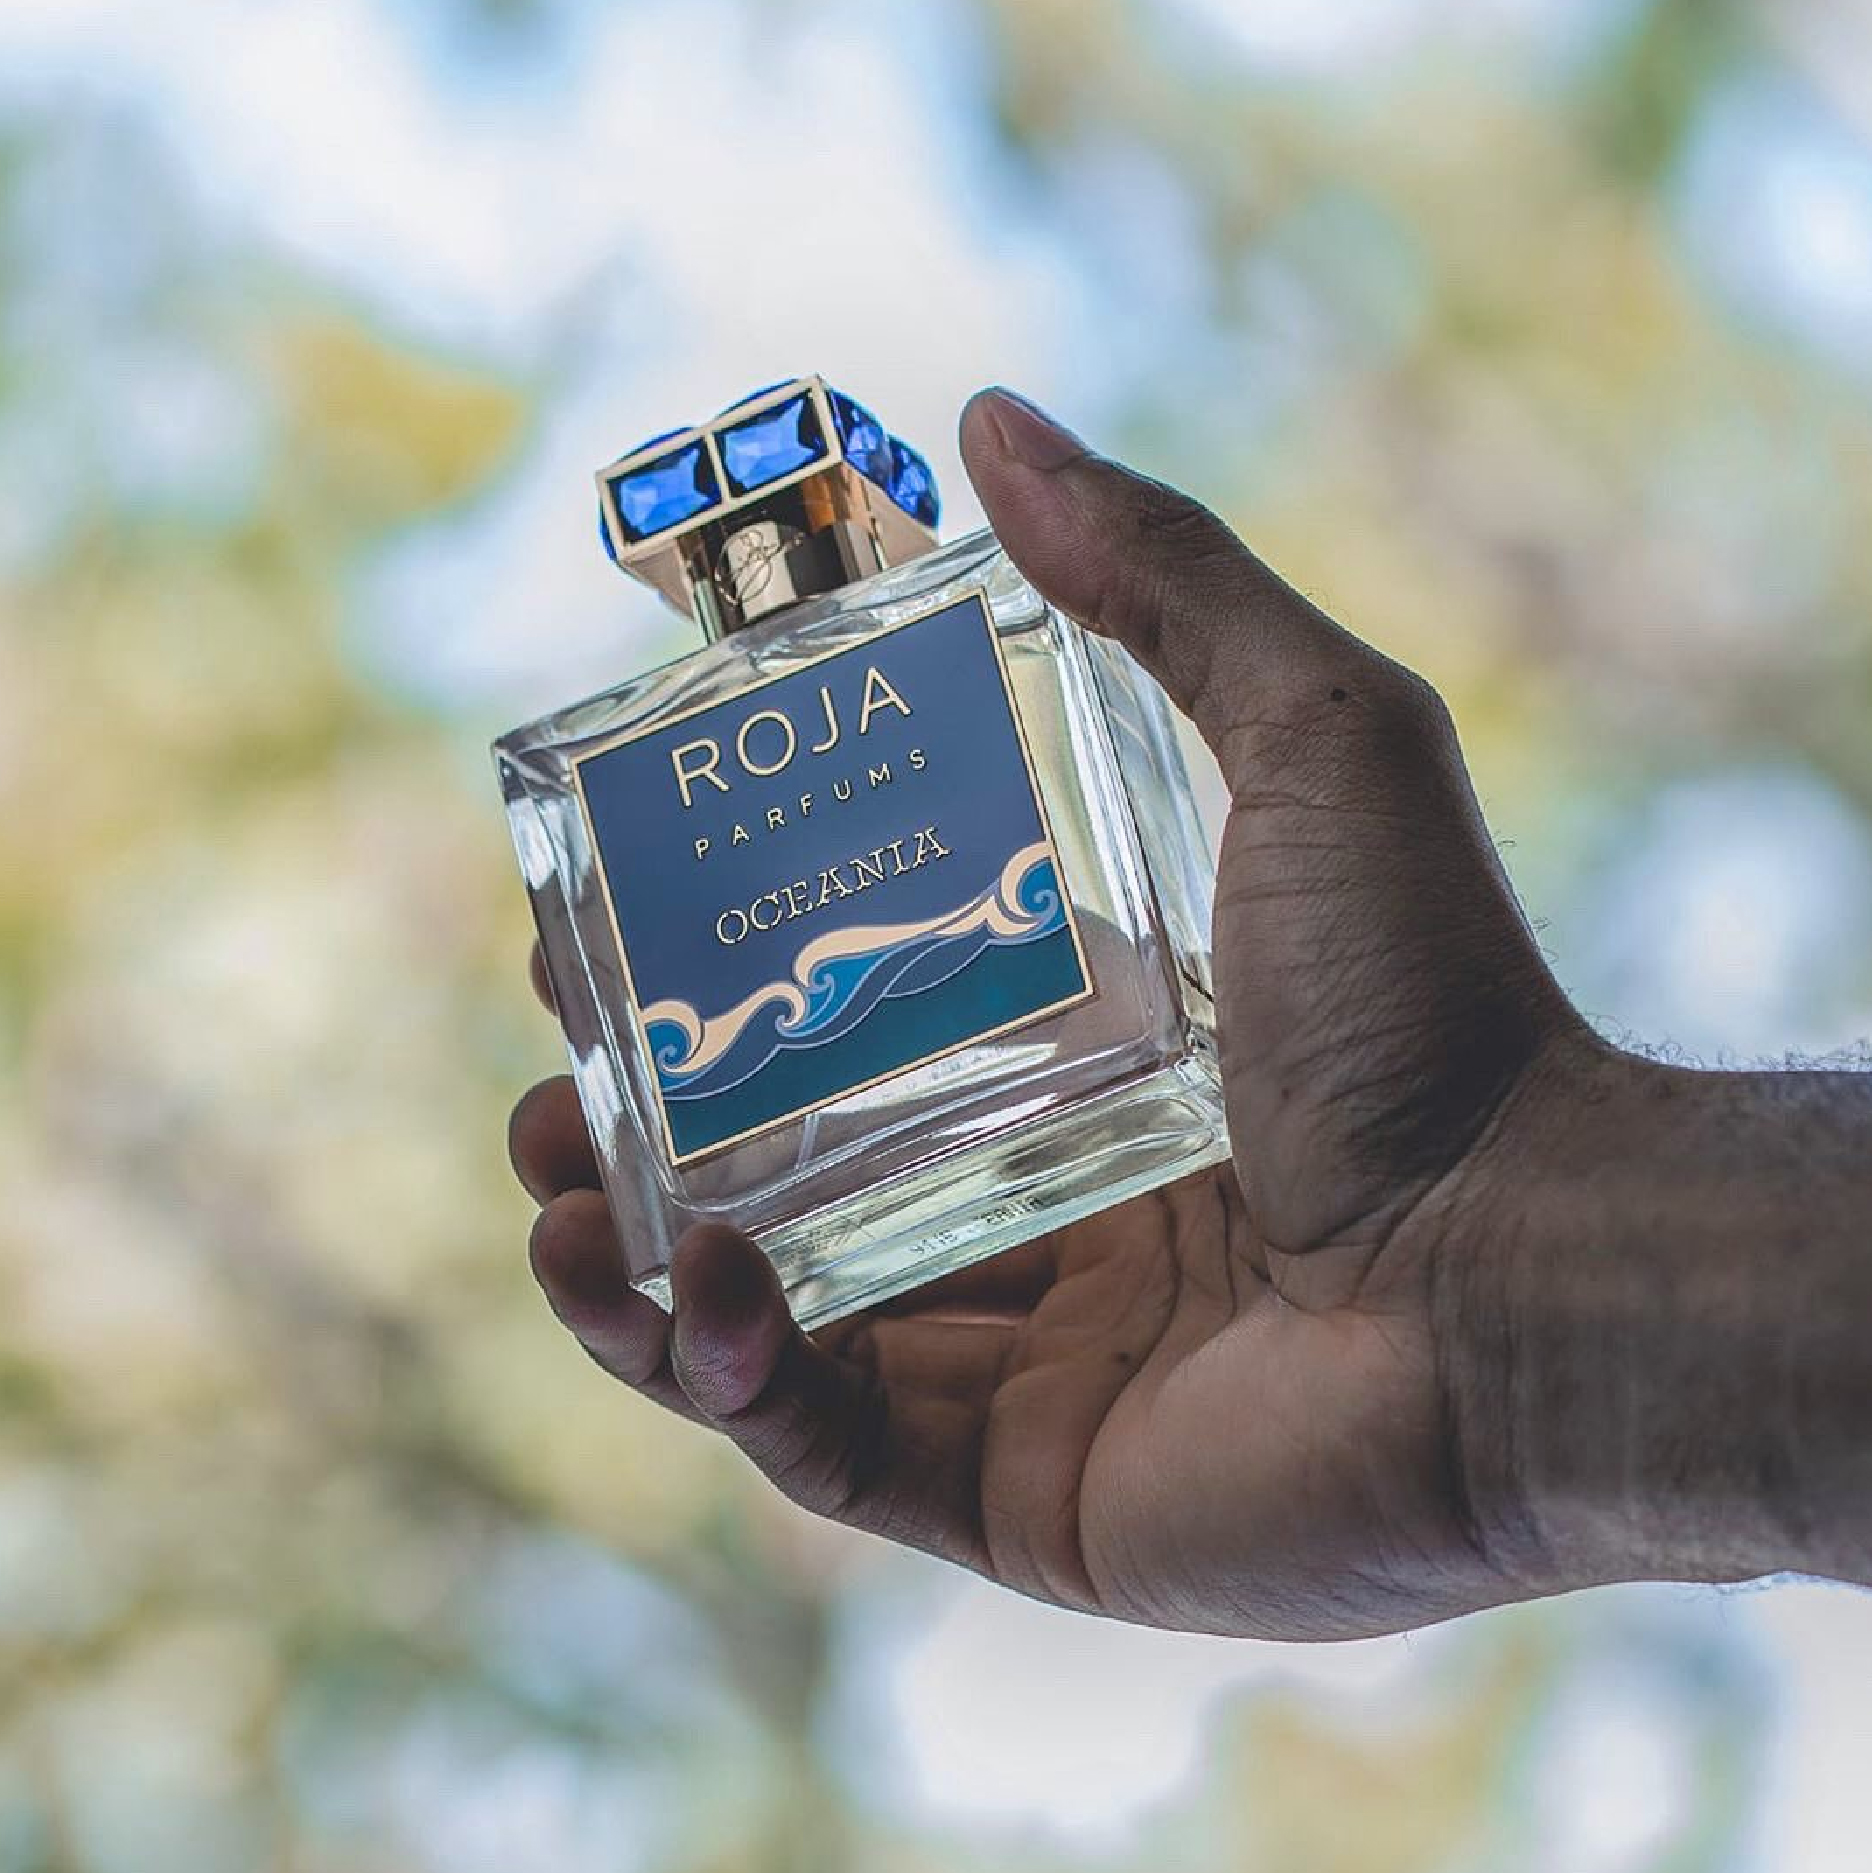 Roja Oceania Parfum 100ml